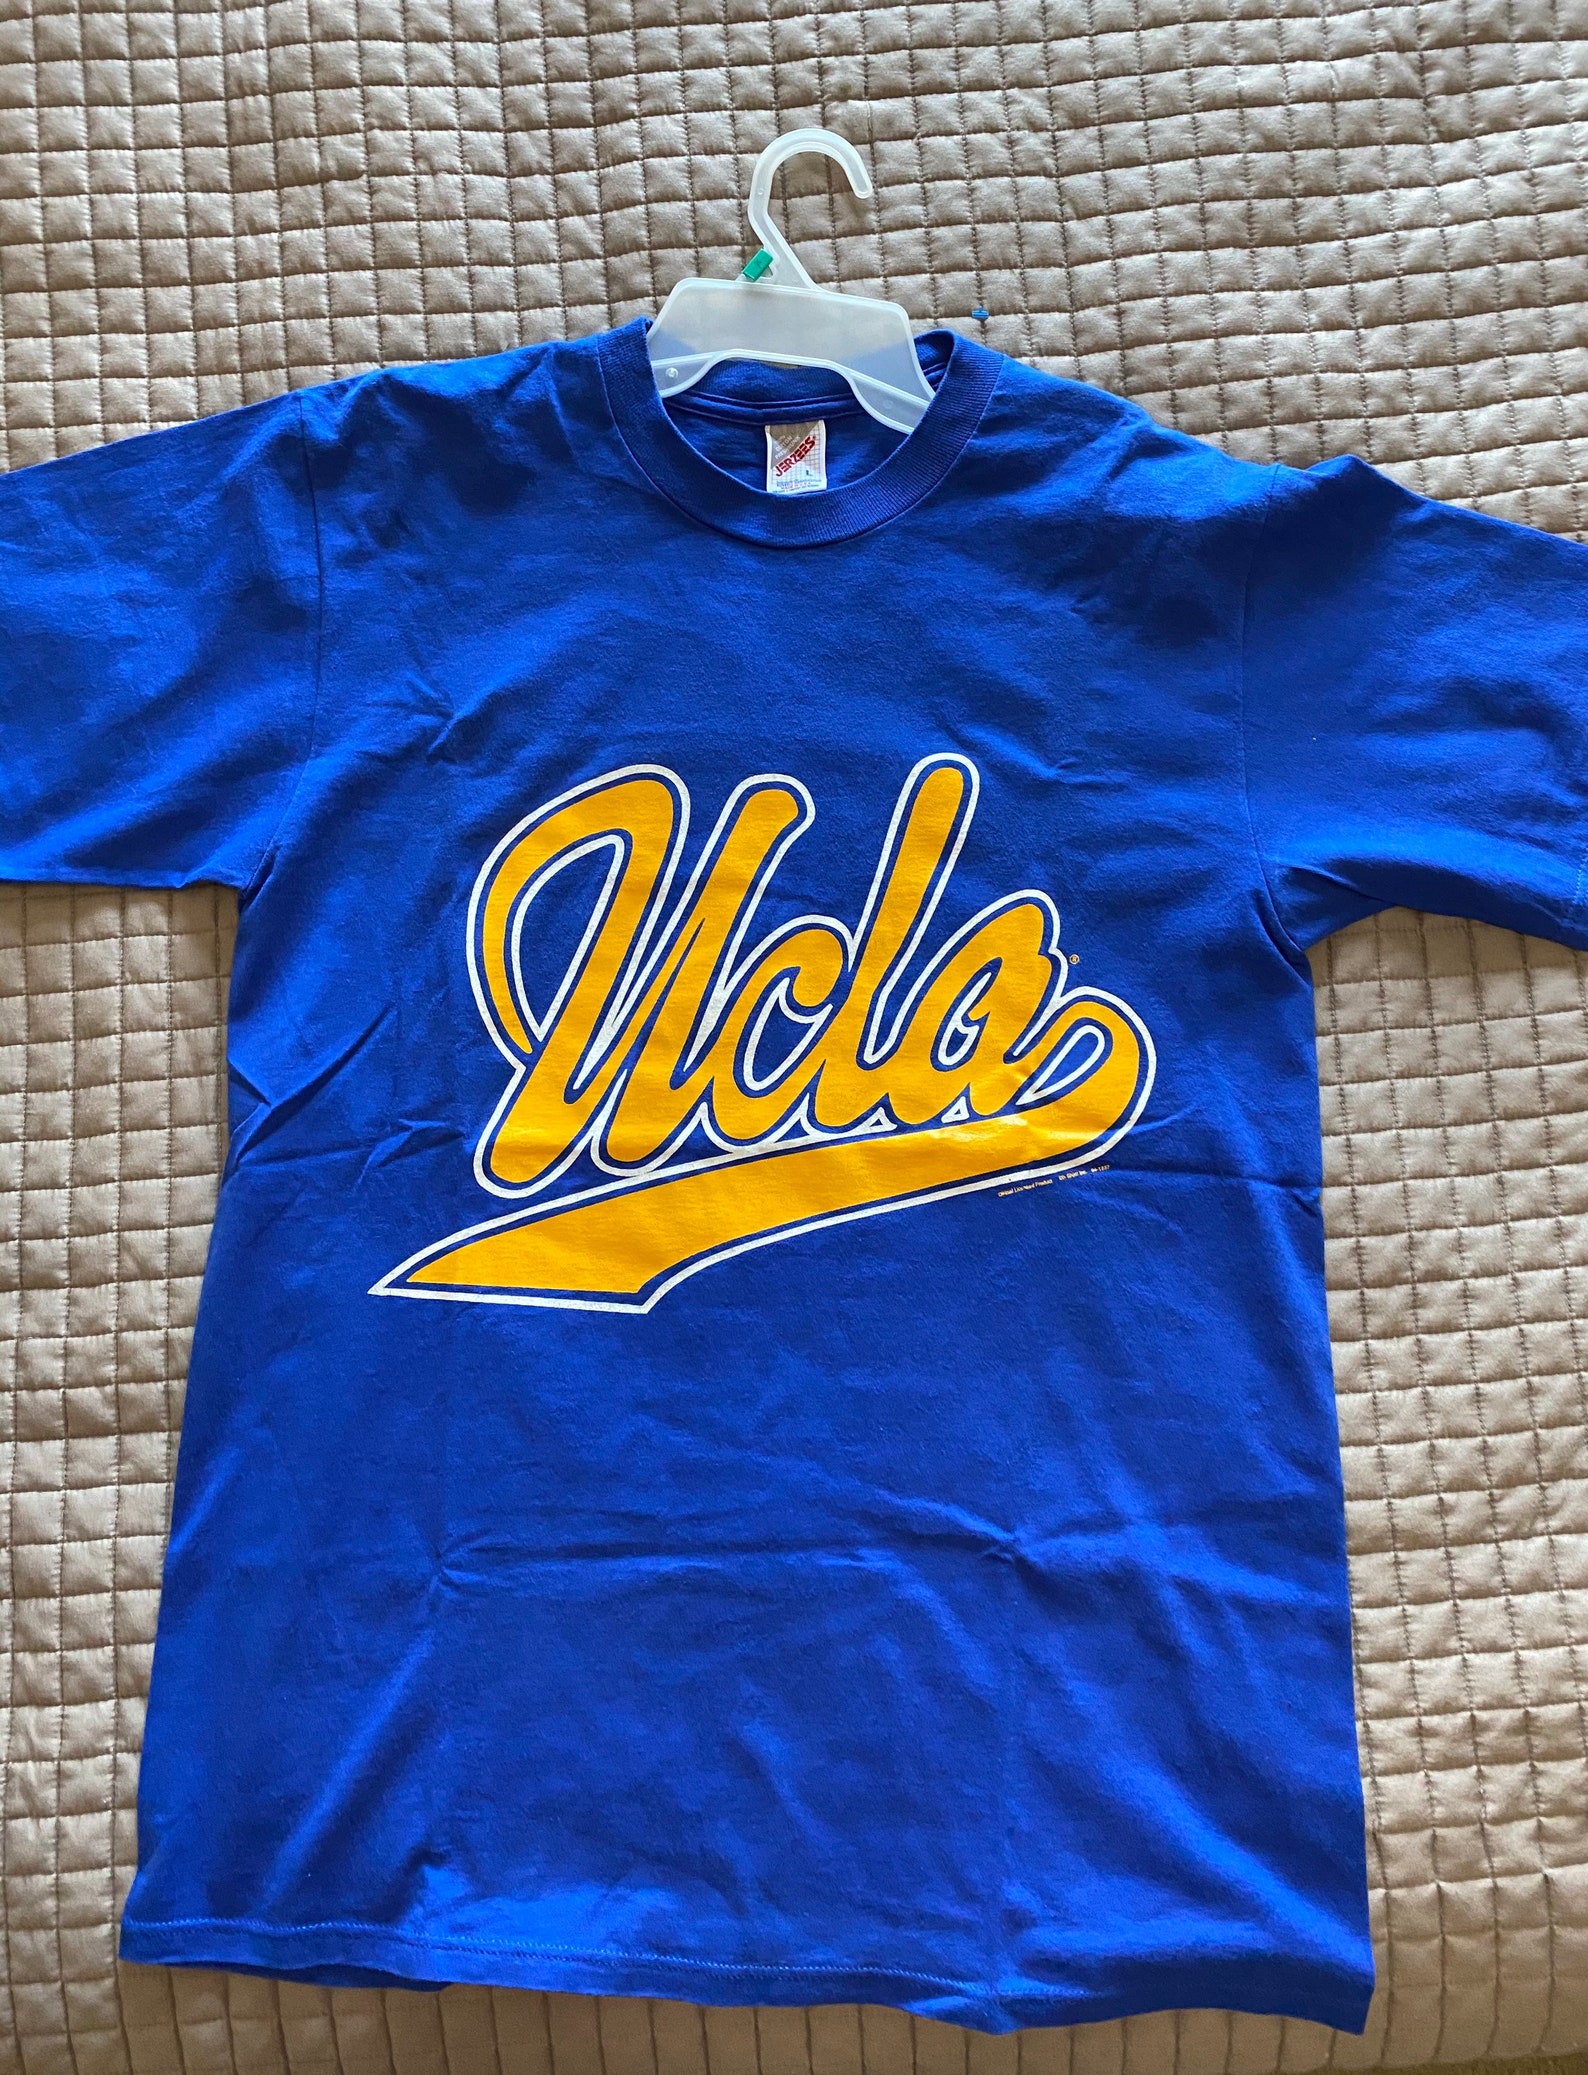 Size Large vintage ucla shirt 1990s vintage UCLA vintage | Etsy